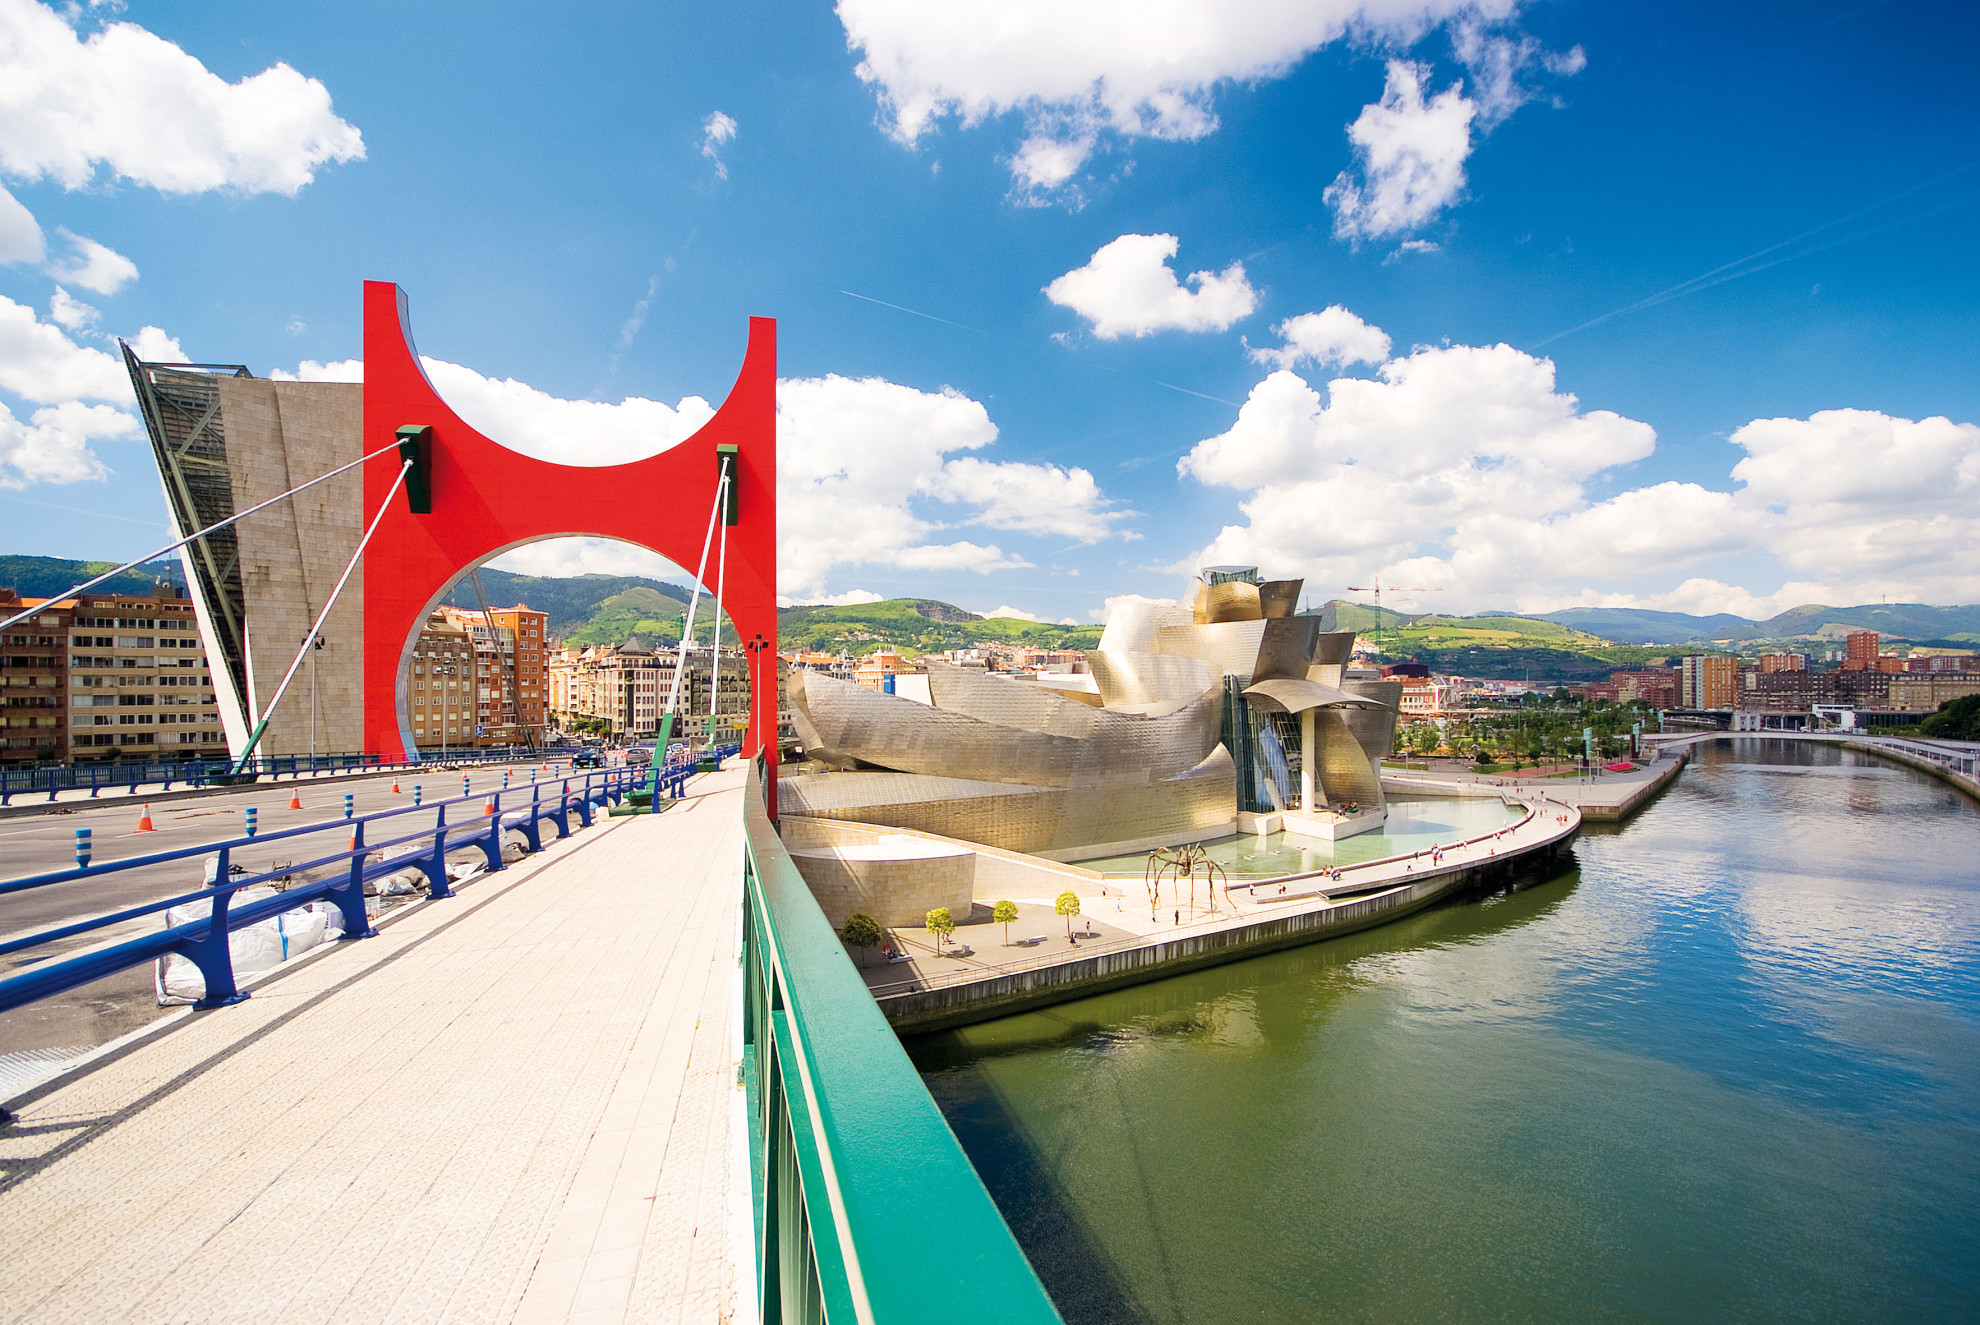 A view overlooking the Guggenheim museum in Bilbao